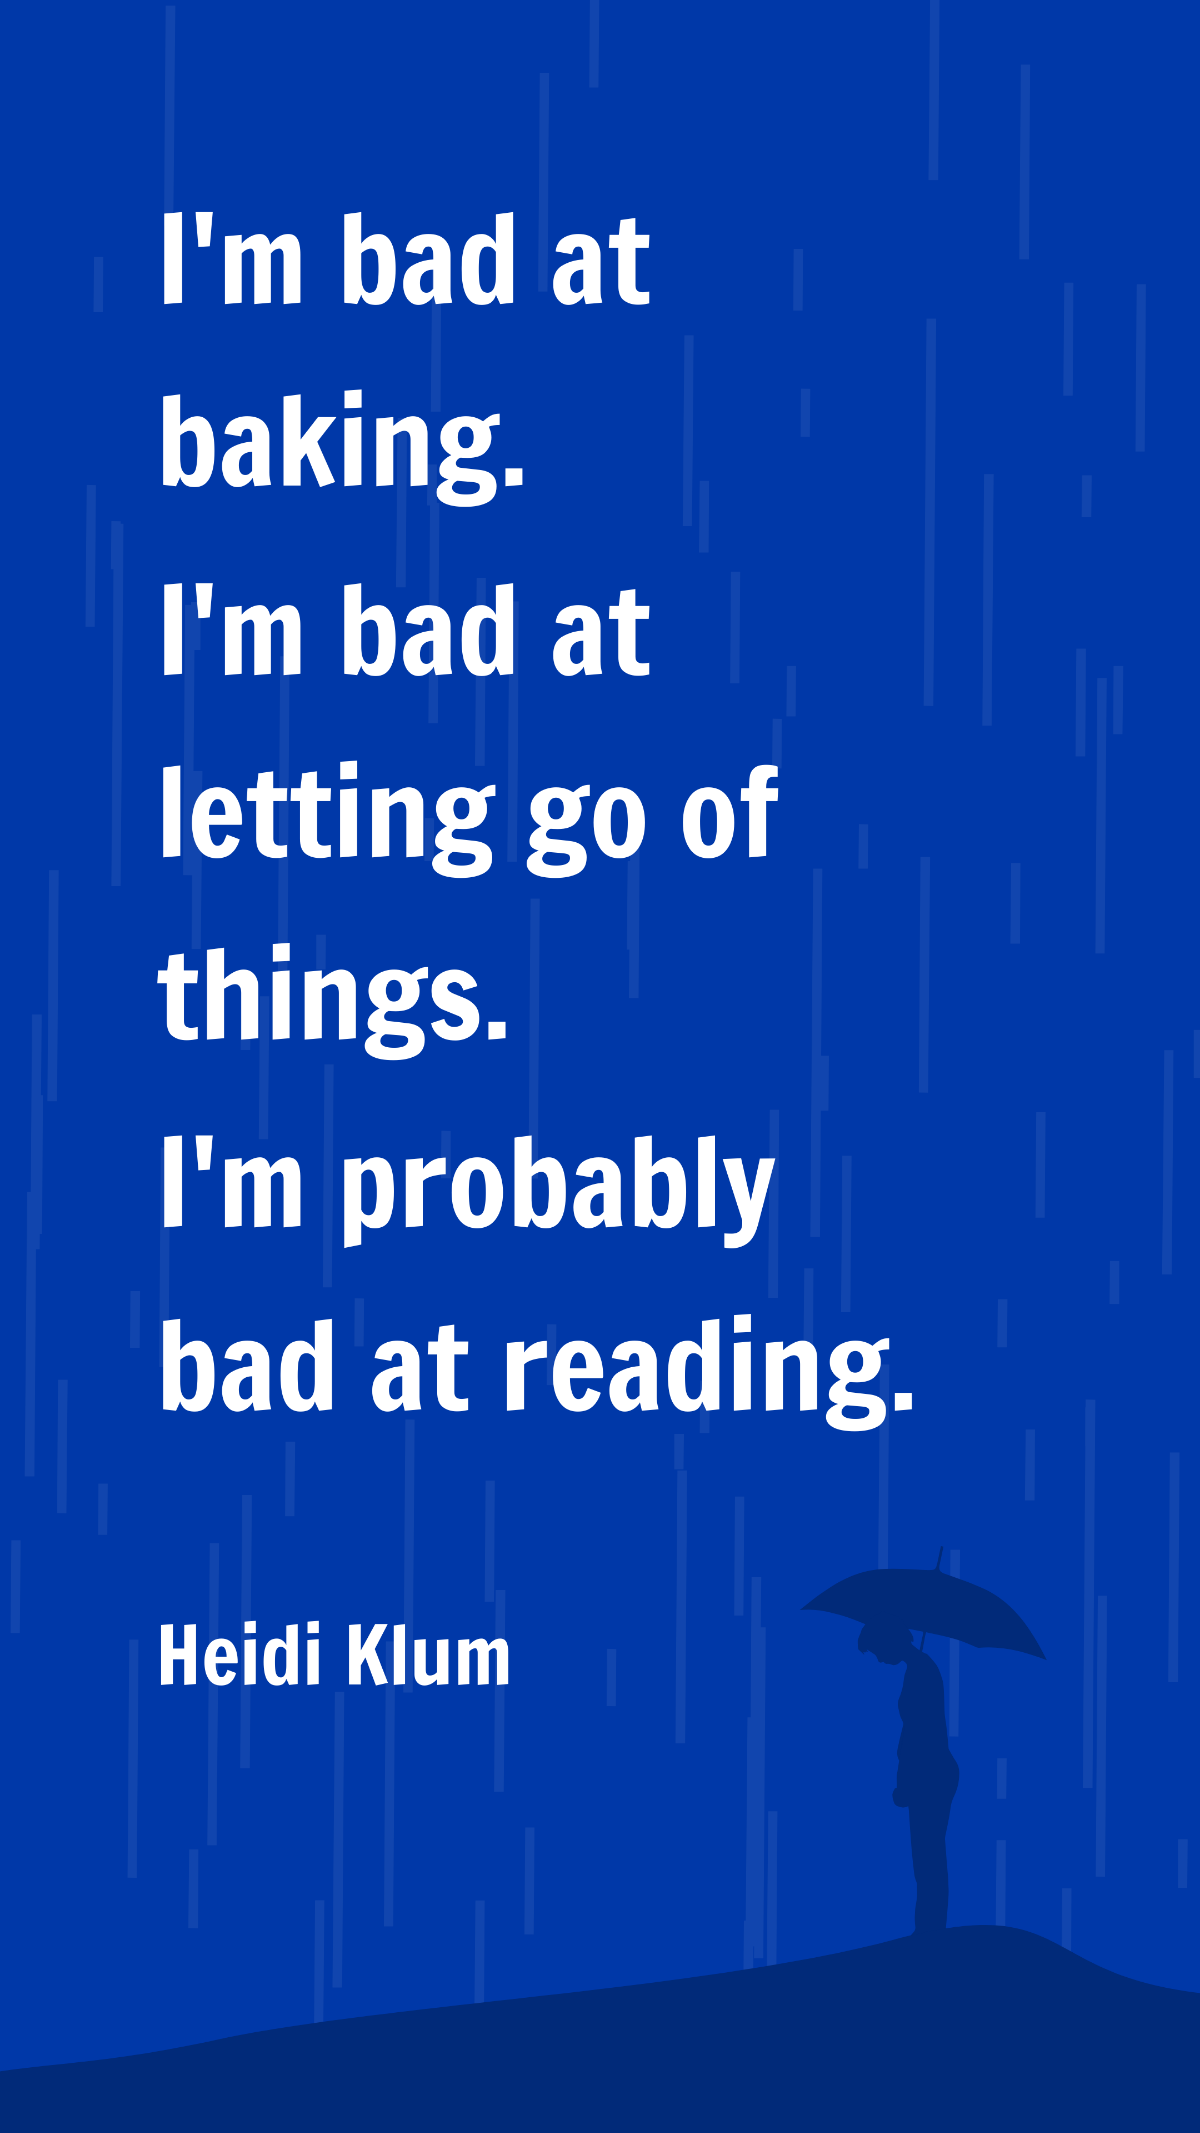 Heidi Klum - I'm bad at baking. I'm bad at letting go of things. I'm probably bad at reading. Template